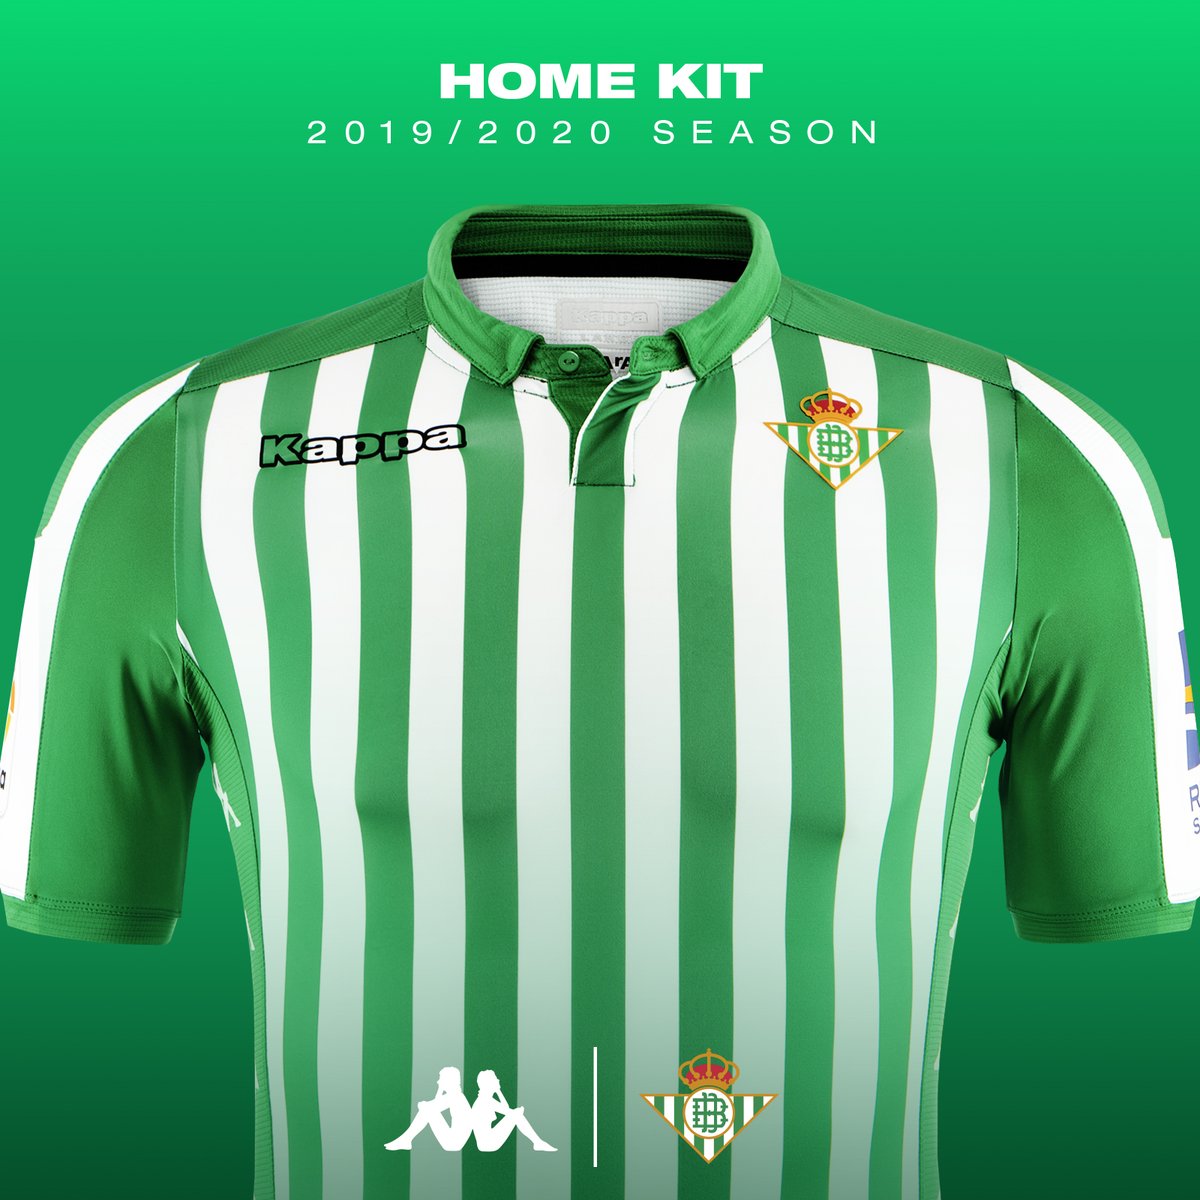 Real Betis 2019-20 Kappa Home Kit | 19/20 Kits | Football shirt blog